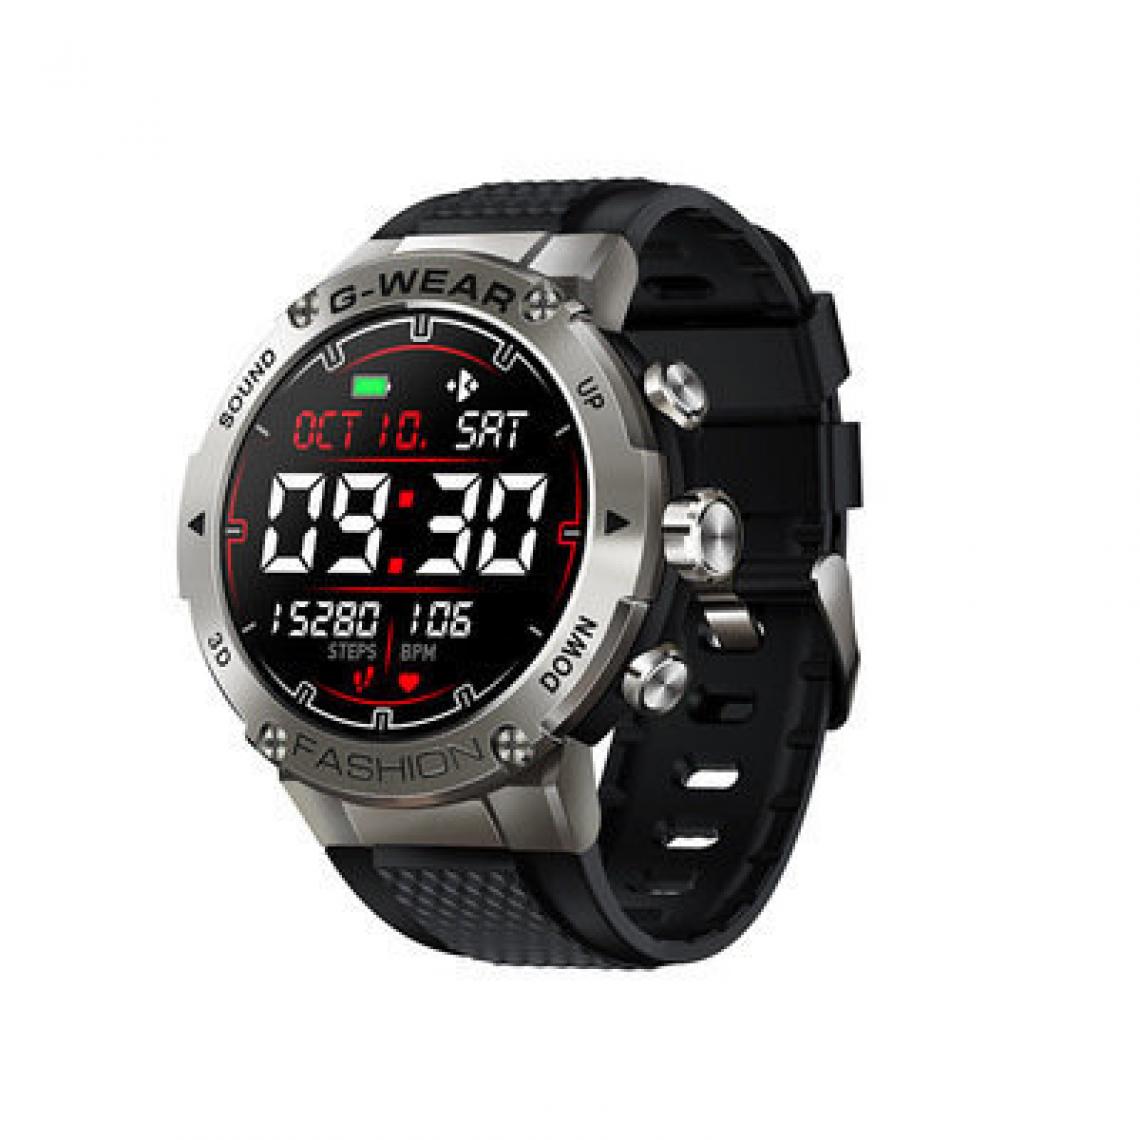 Chronotech Montres - Chronus Smart Watch 1.3 inch Smart Watch Full Digital Sport Watch with Military Grade Standard(Gray) - Montre connectée